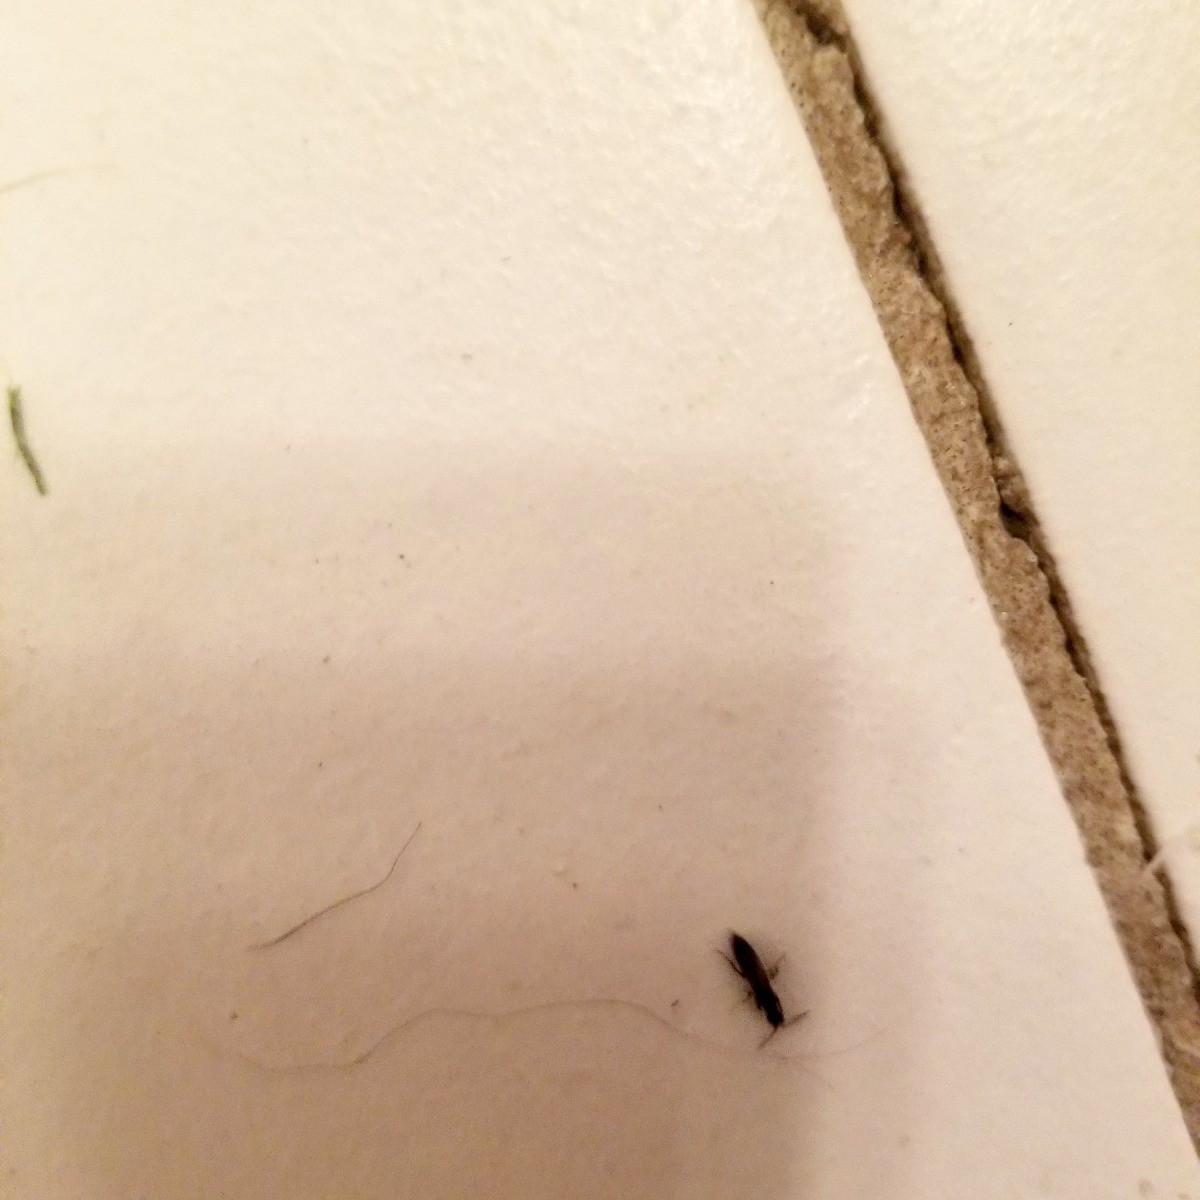 Small black bugs - lopinews